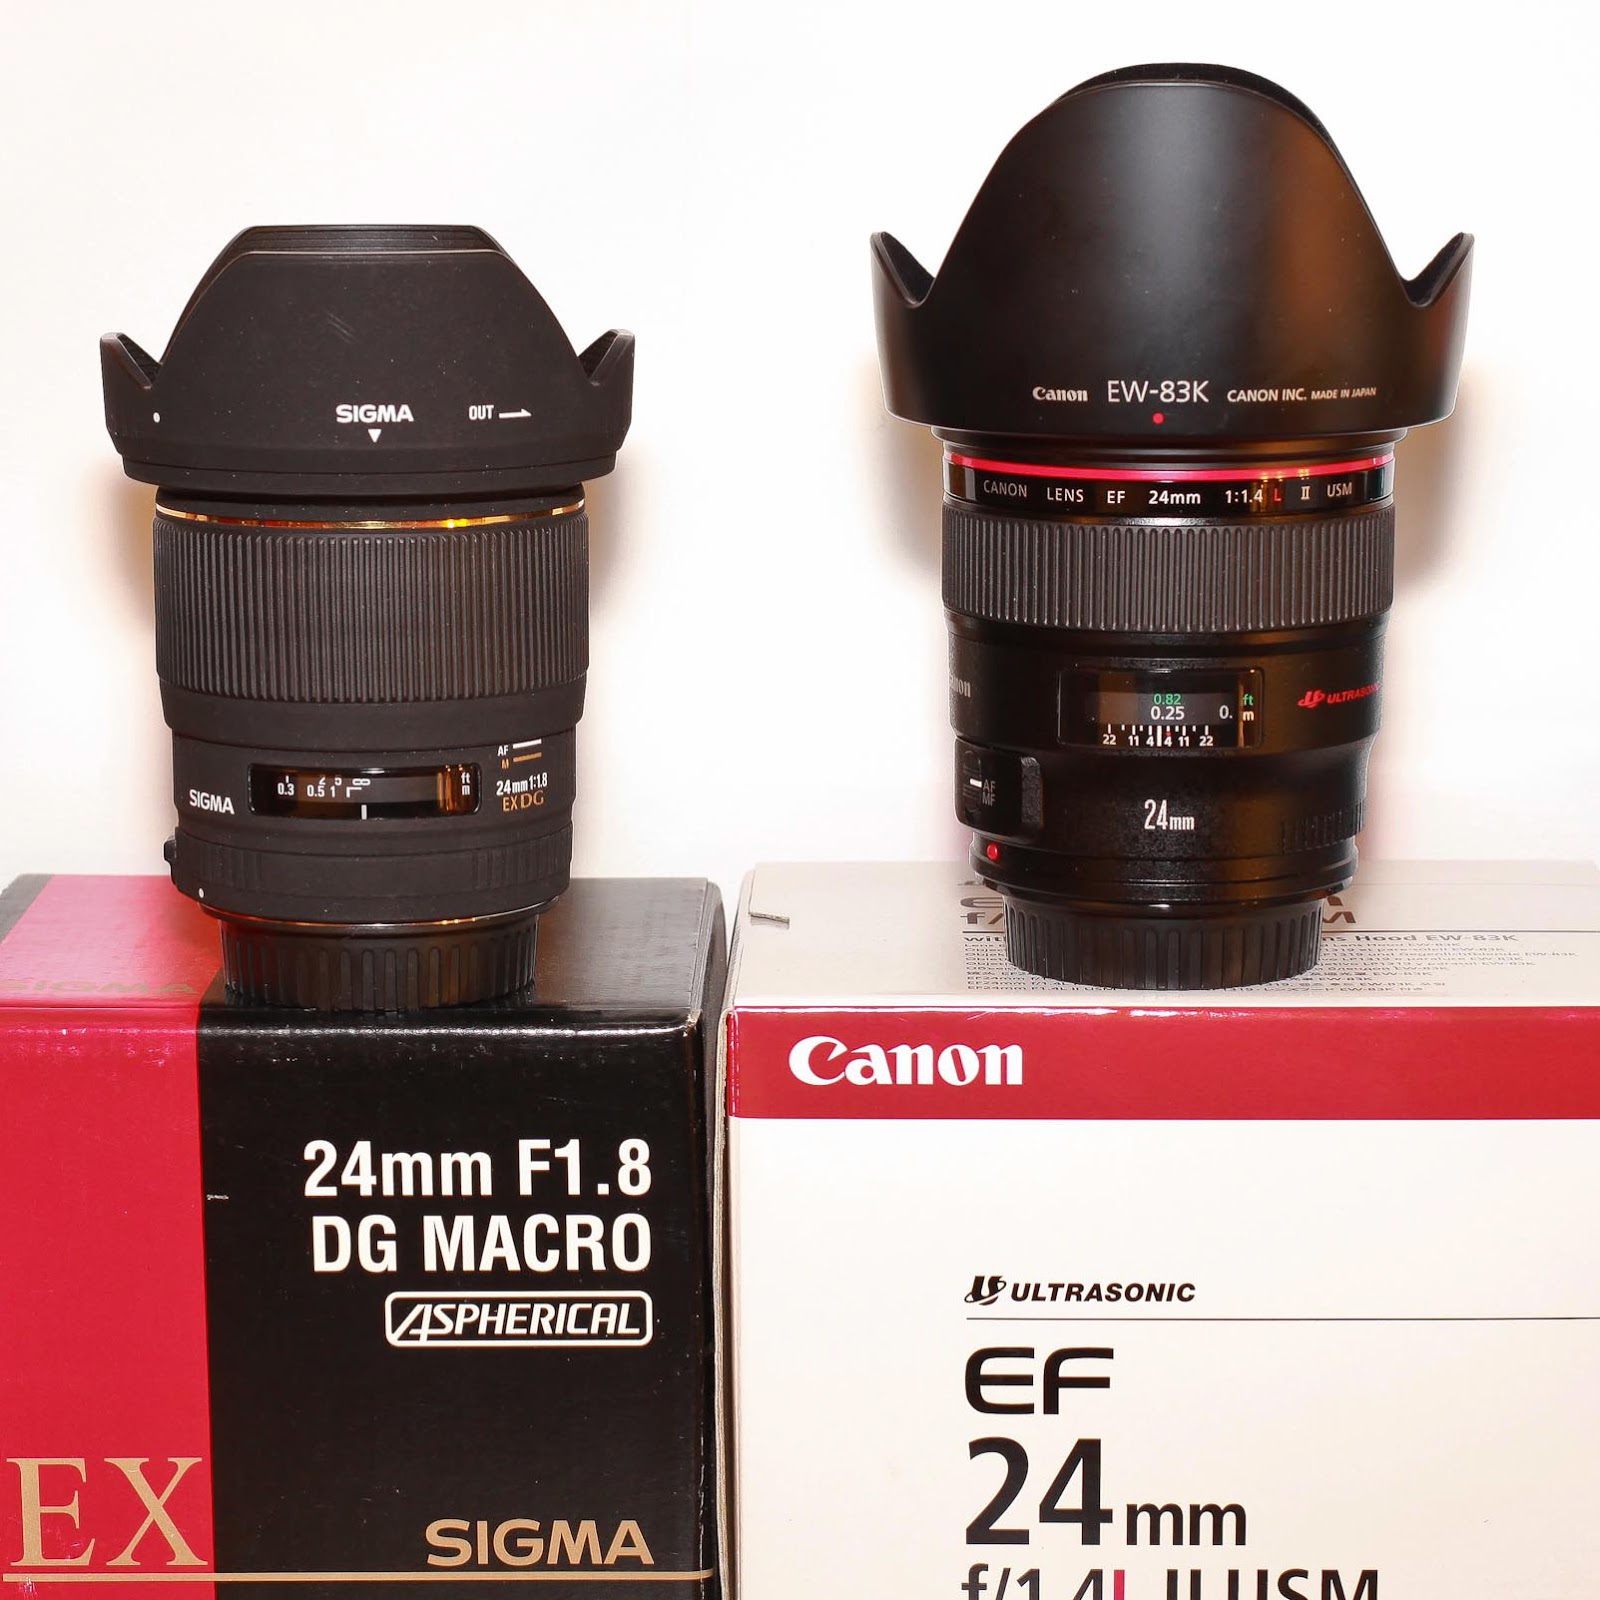 愛說話的貓: 新鏡入手Canon EF 24mm f/1.4L II USM